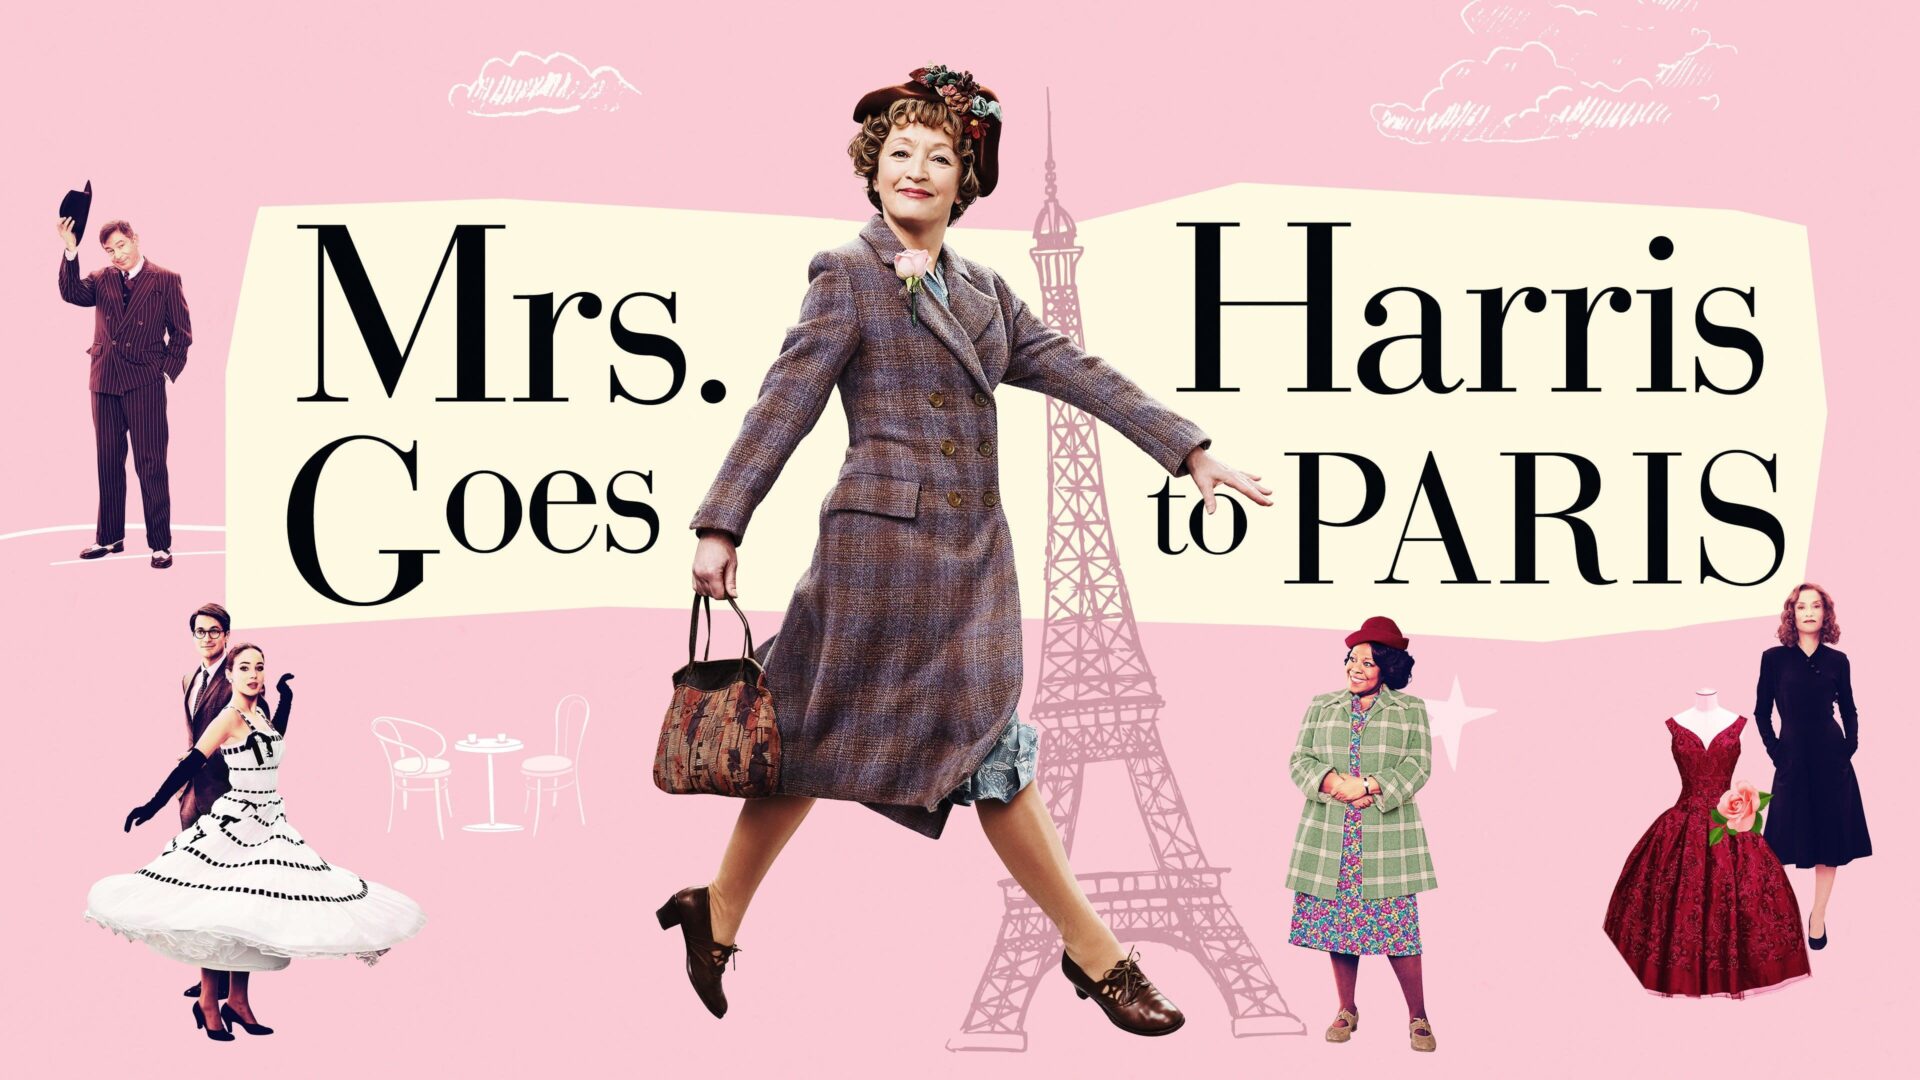 MRS HARRIS GOES TO PARIS (LA SIGNORA HARRIS VA A PARIGI) – V.O.S.